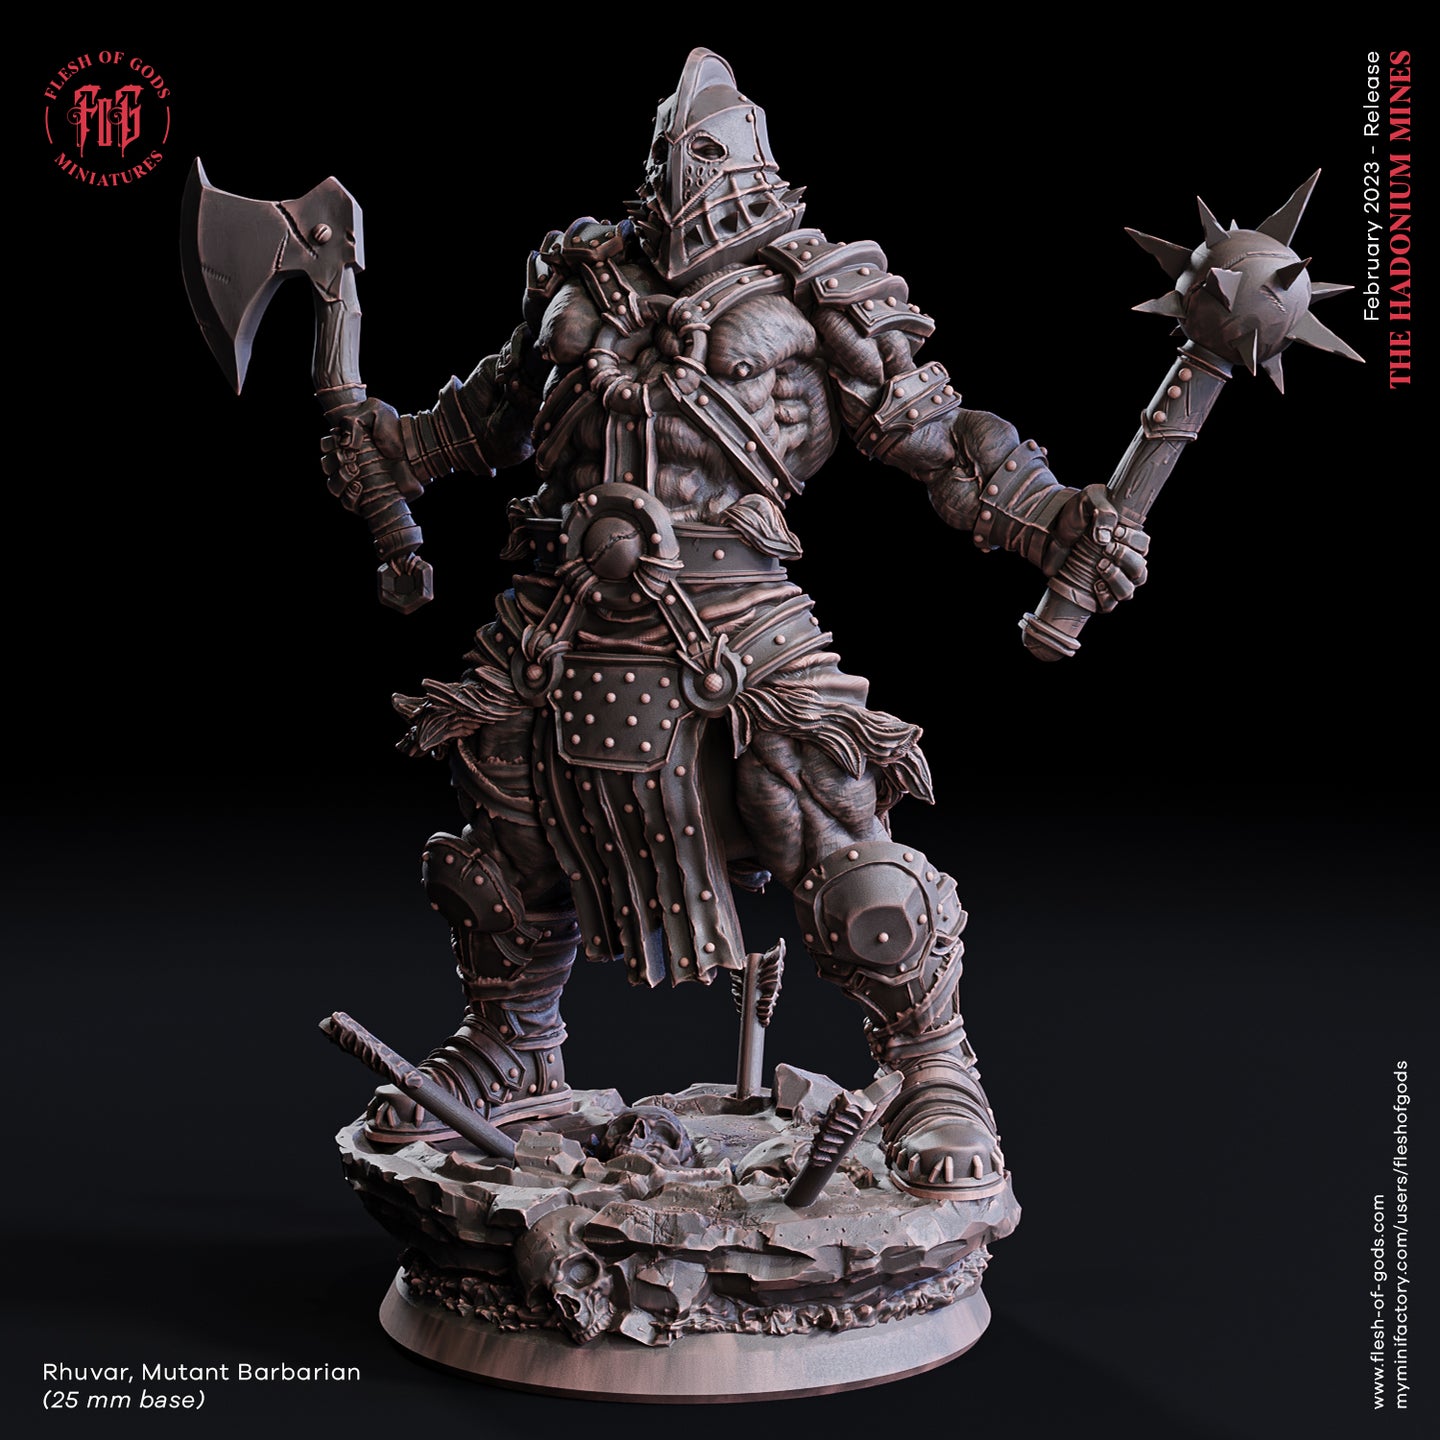 Rhuvar, Mutant Barbarian - The Hadonium Mines - Flesh of Gods - Wargaming D&D DnD